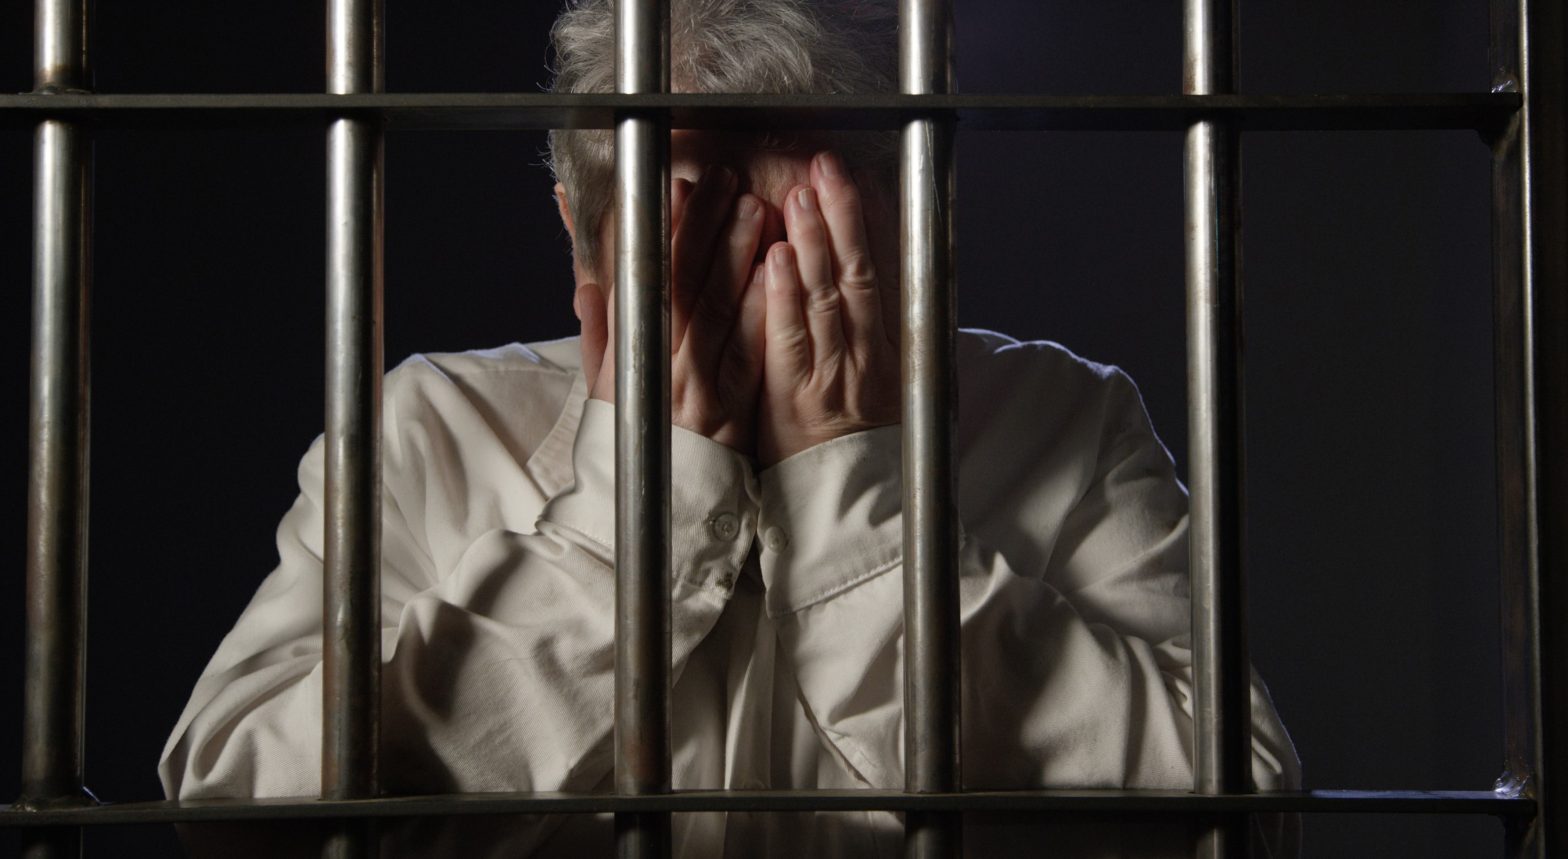 Elderly behind bars. News - North Carolina jails grapple with mental health challenges as sheriffs seek solutions beyond incarceration